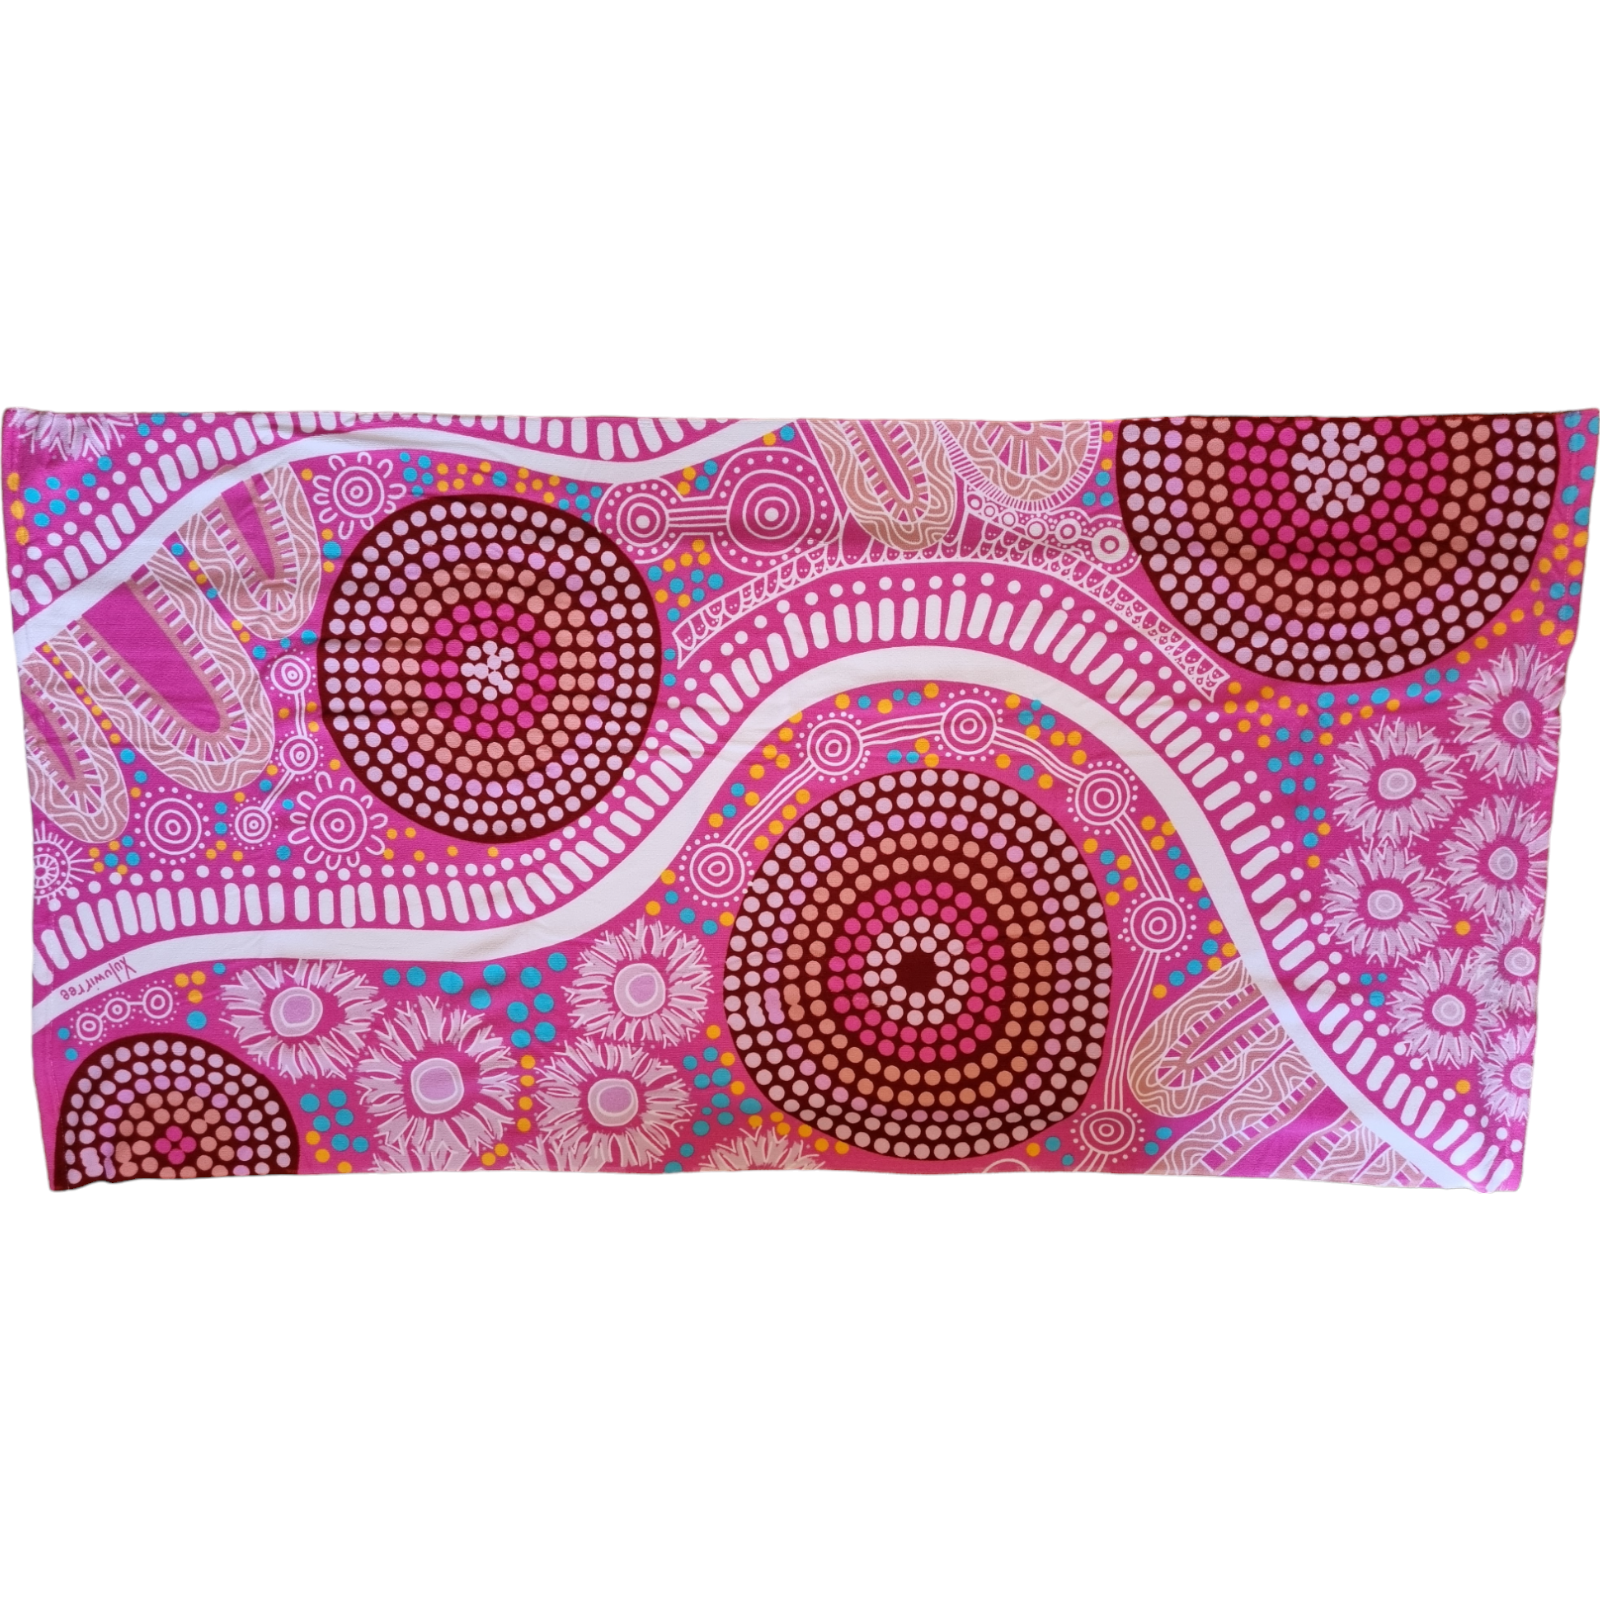 Aboriginal indigenous BEACH TOWEL Microfiber BULURRA WOMEN'S JOURNEY